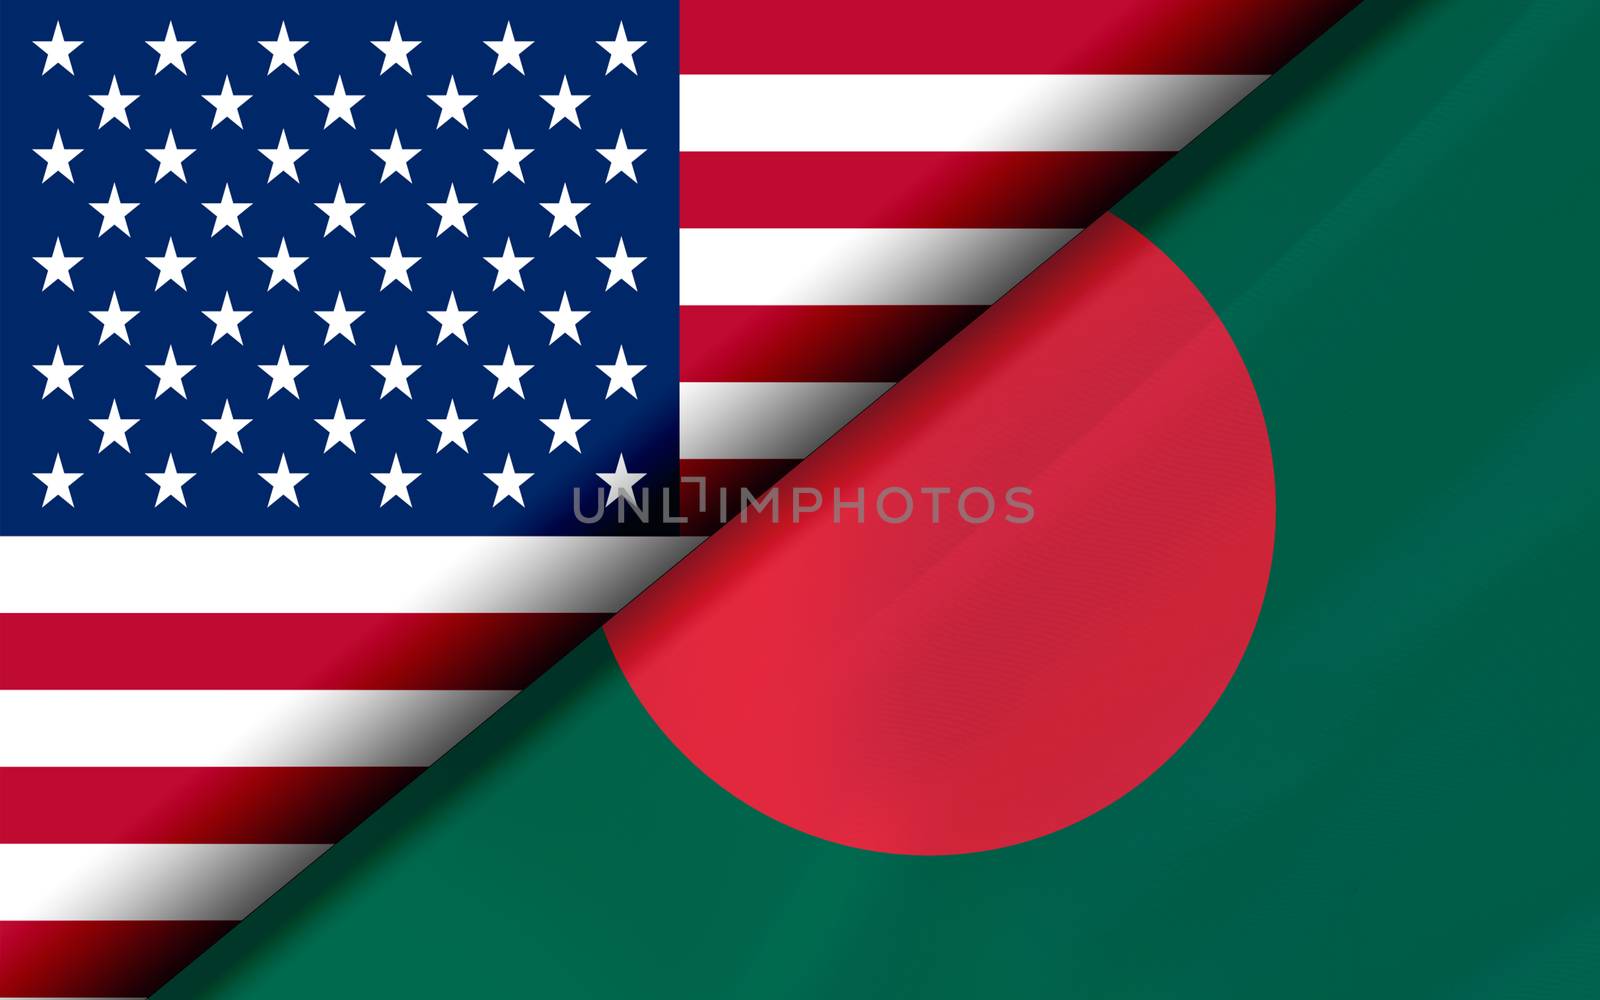 Flags of the USA and Bangladesh divided diagonally. 3D rendering